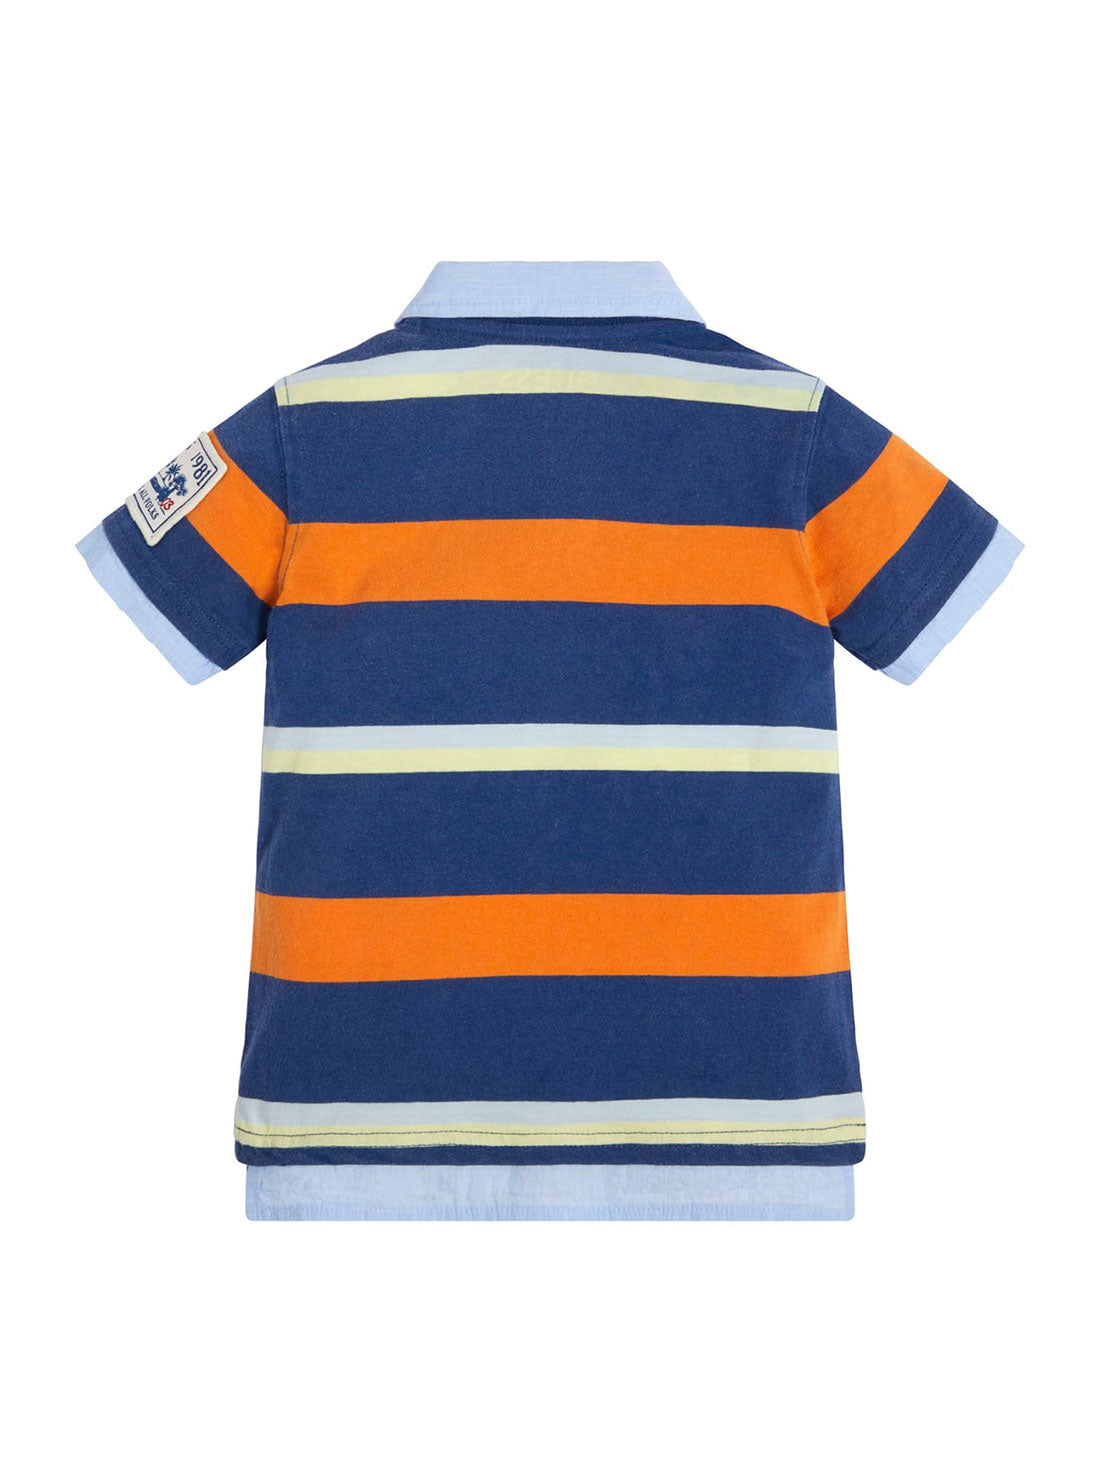 Boy's Eco Orange Striped Polo Shirt back view